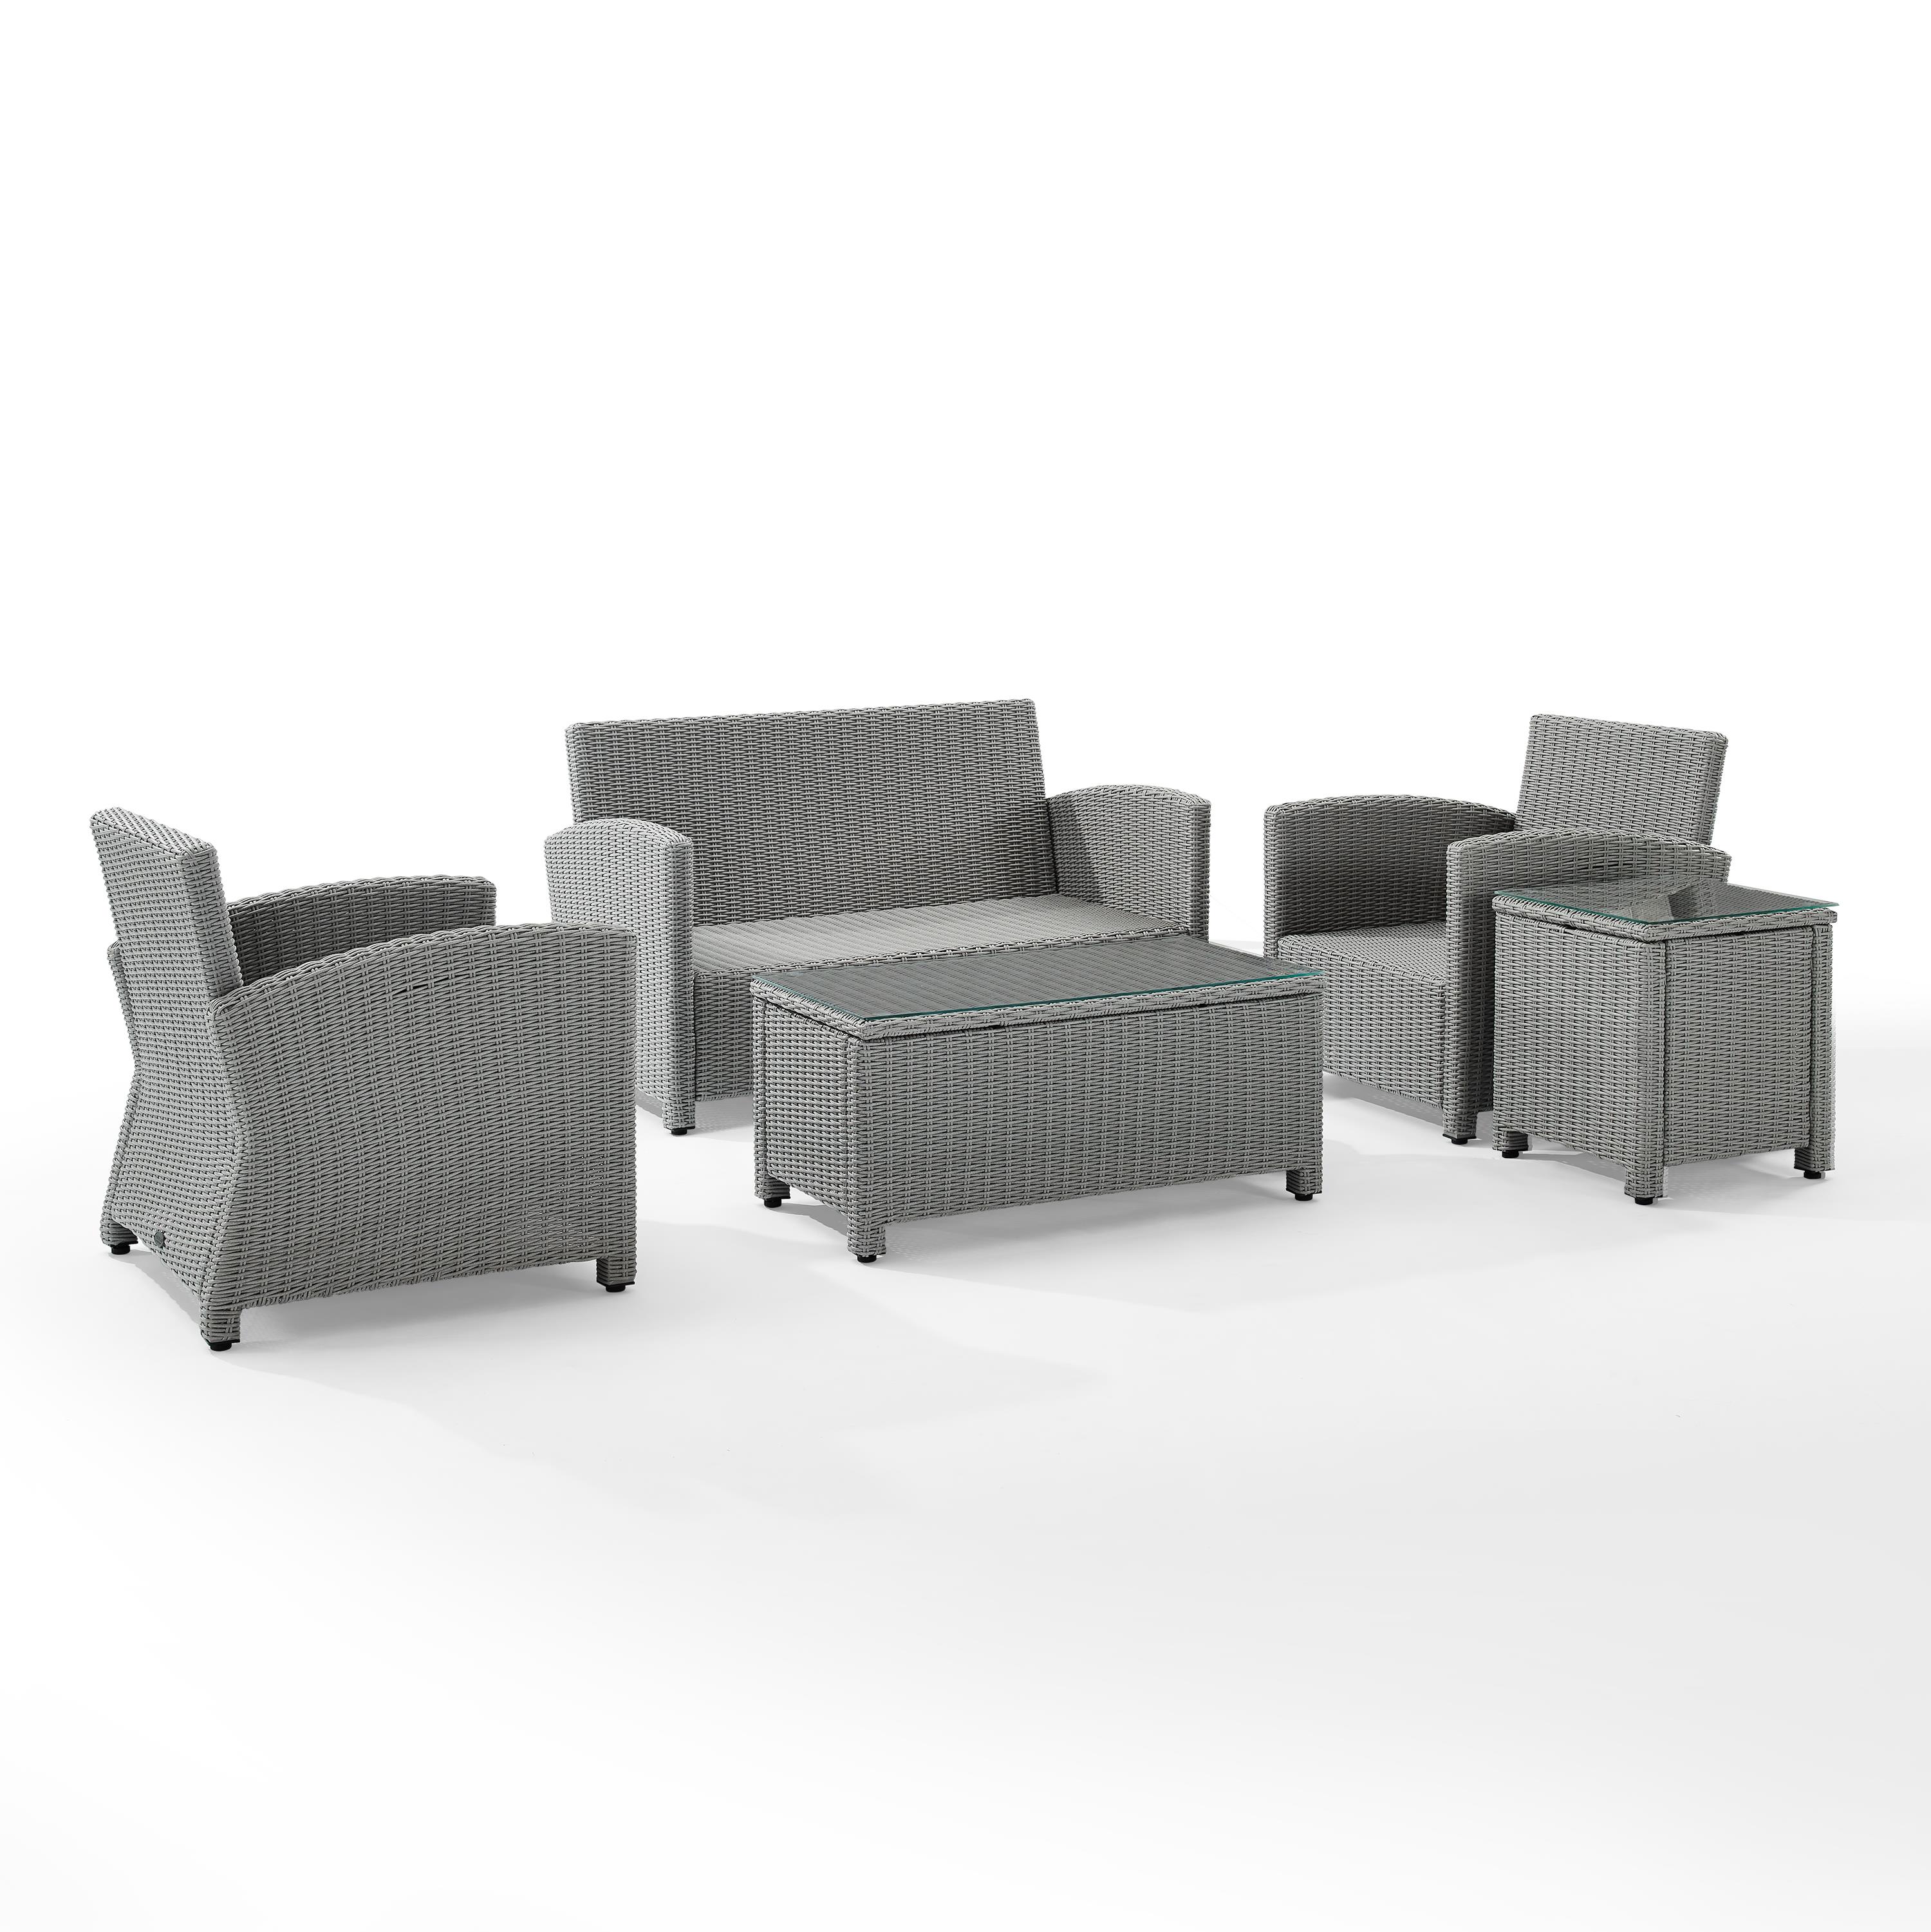 Crosley Bradenton 5 Piece Wicker Patio Sofa Set in Gray - image 4 of 7